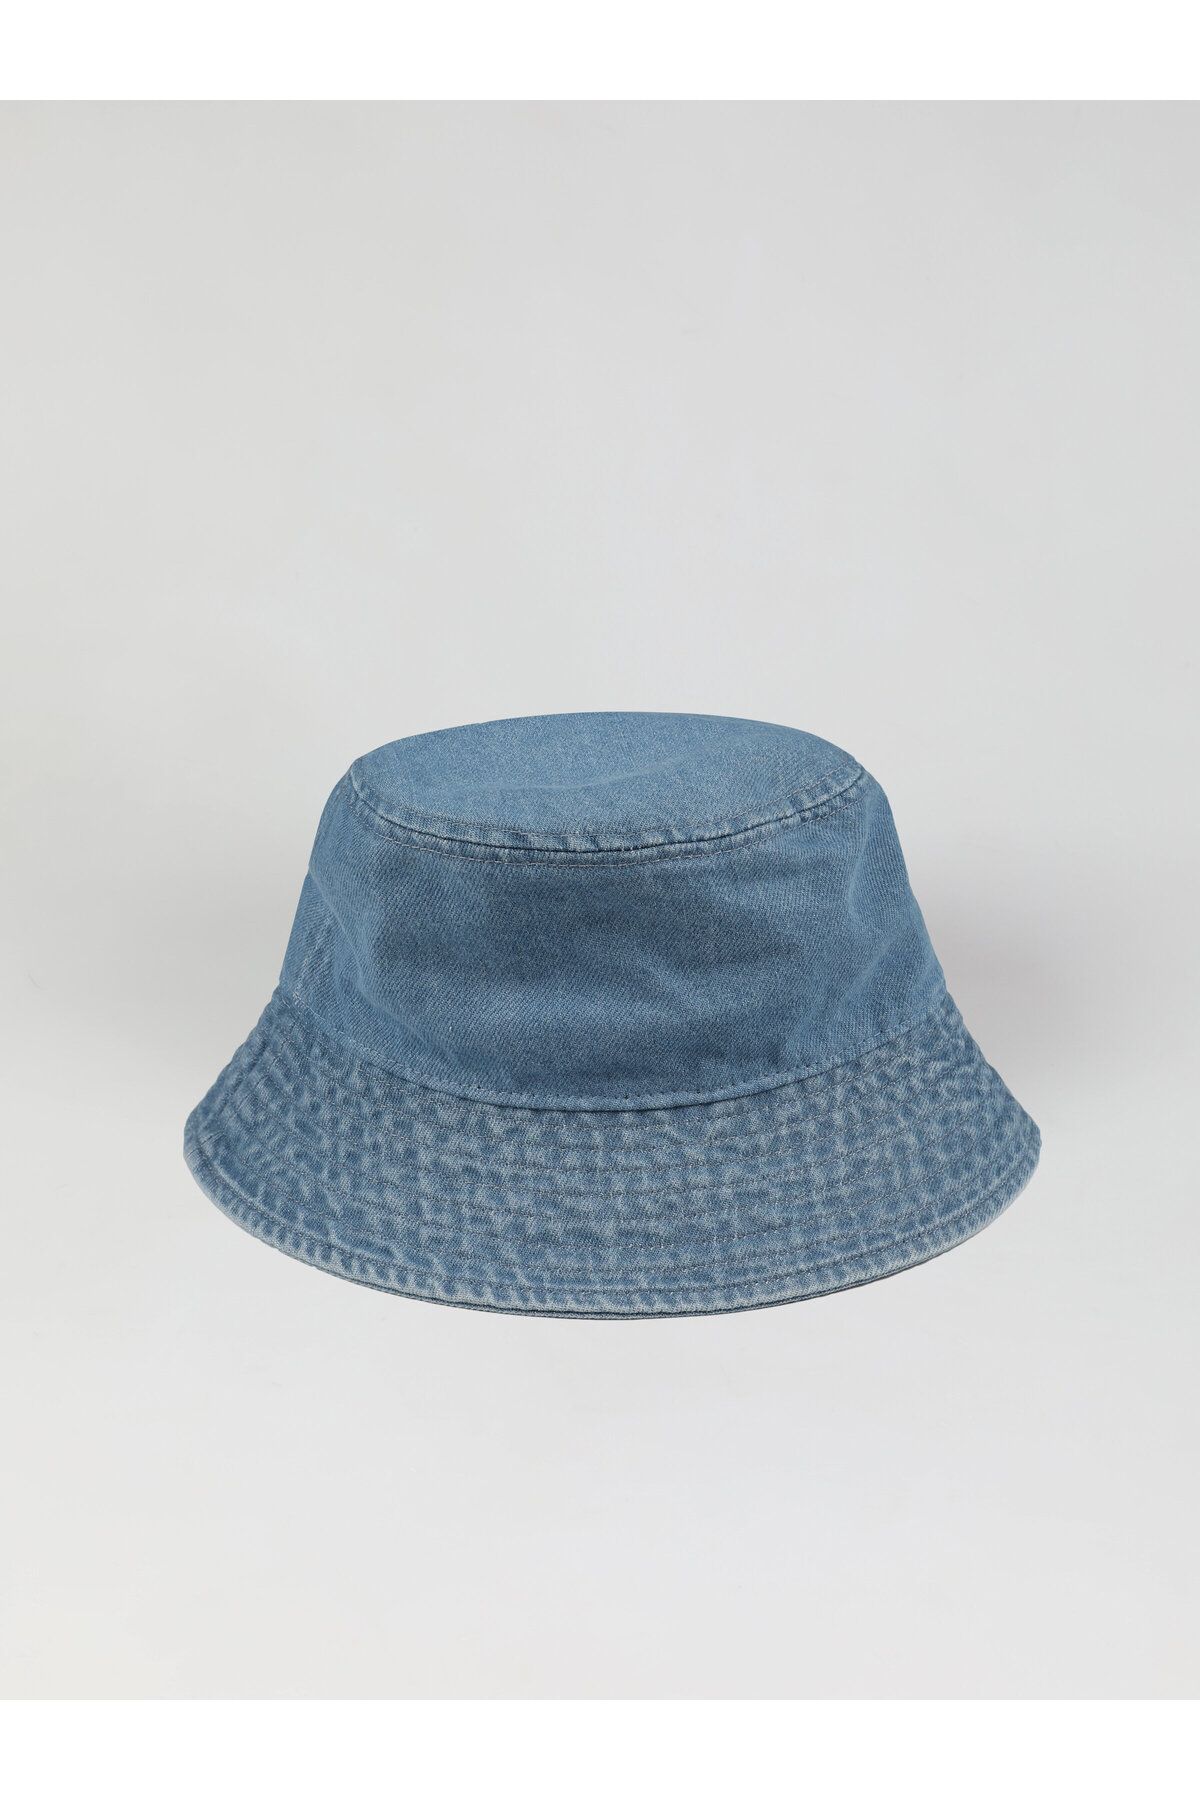 Colin’s Bucket Mavi Kadın Şapka